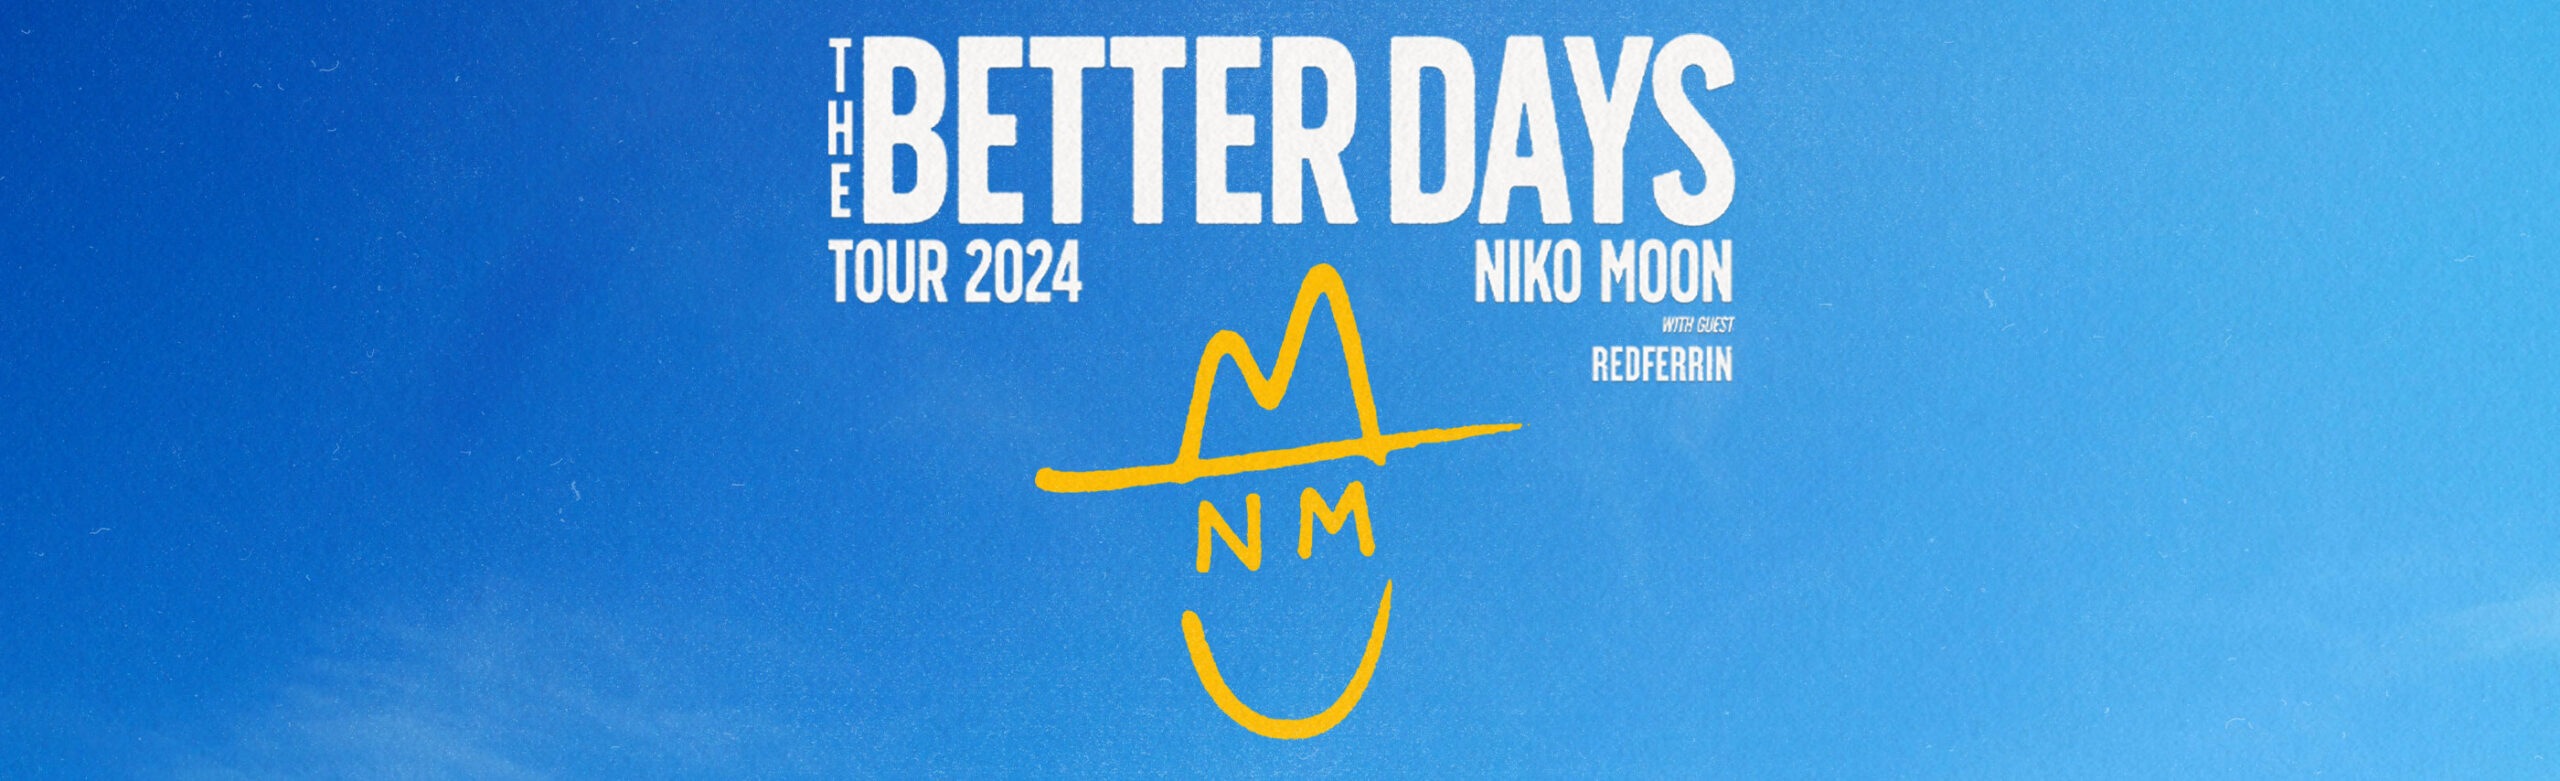 Niko Moon Confirms Concert at The Wilma Image